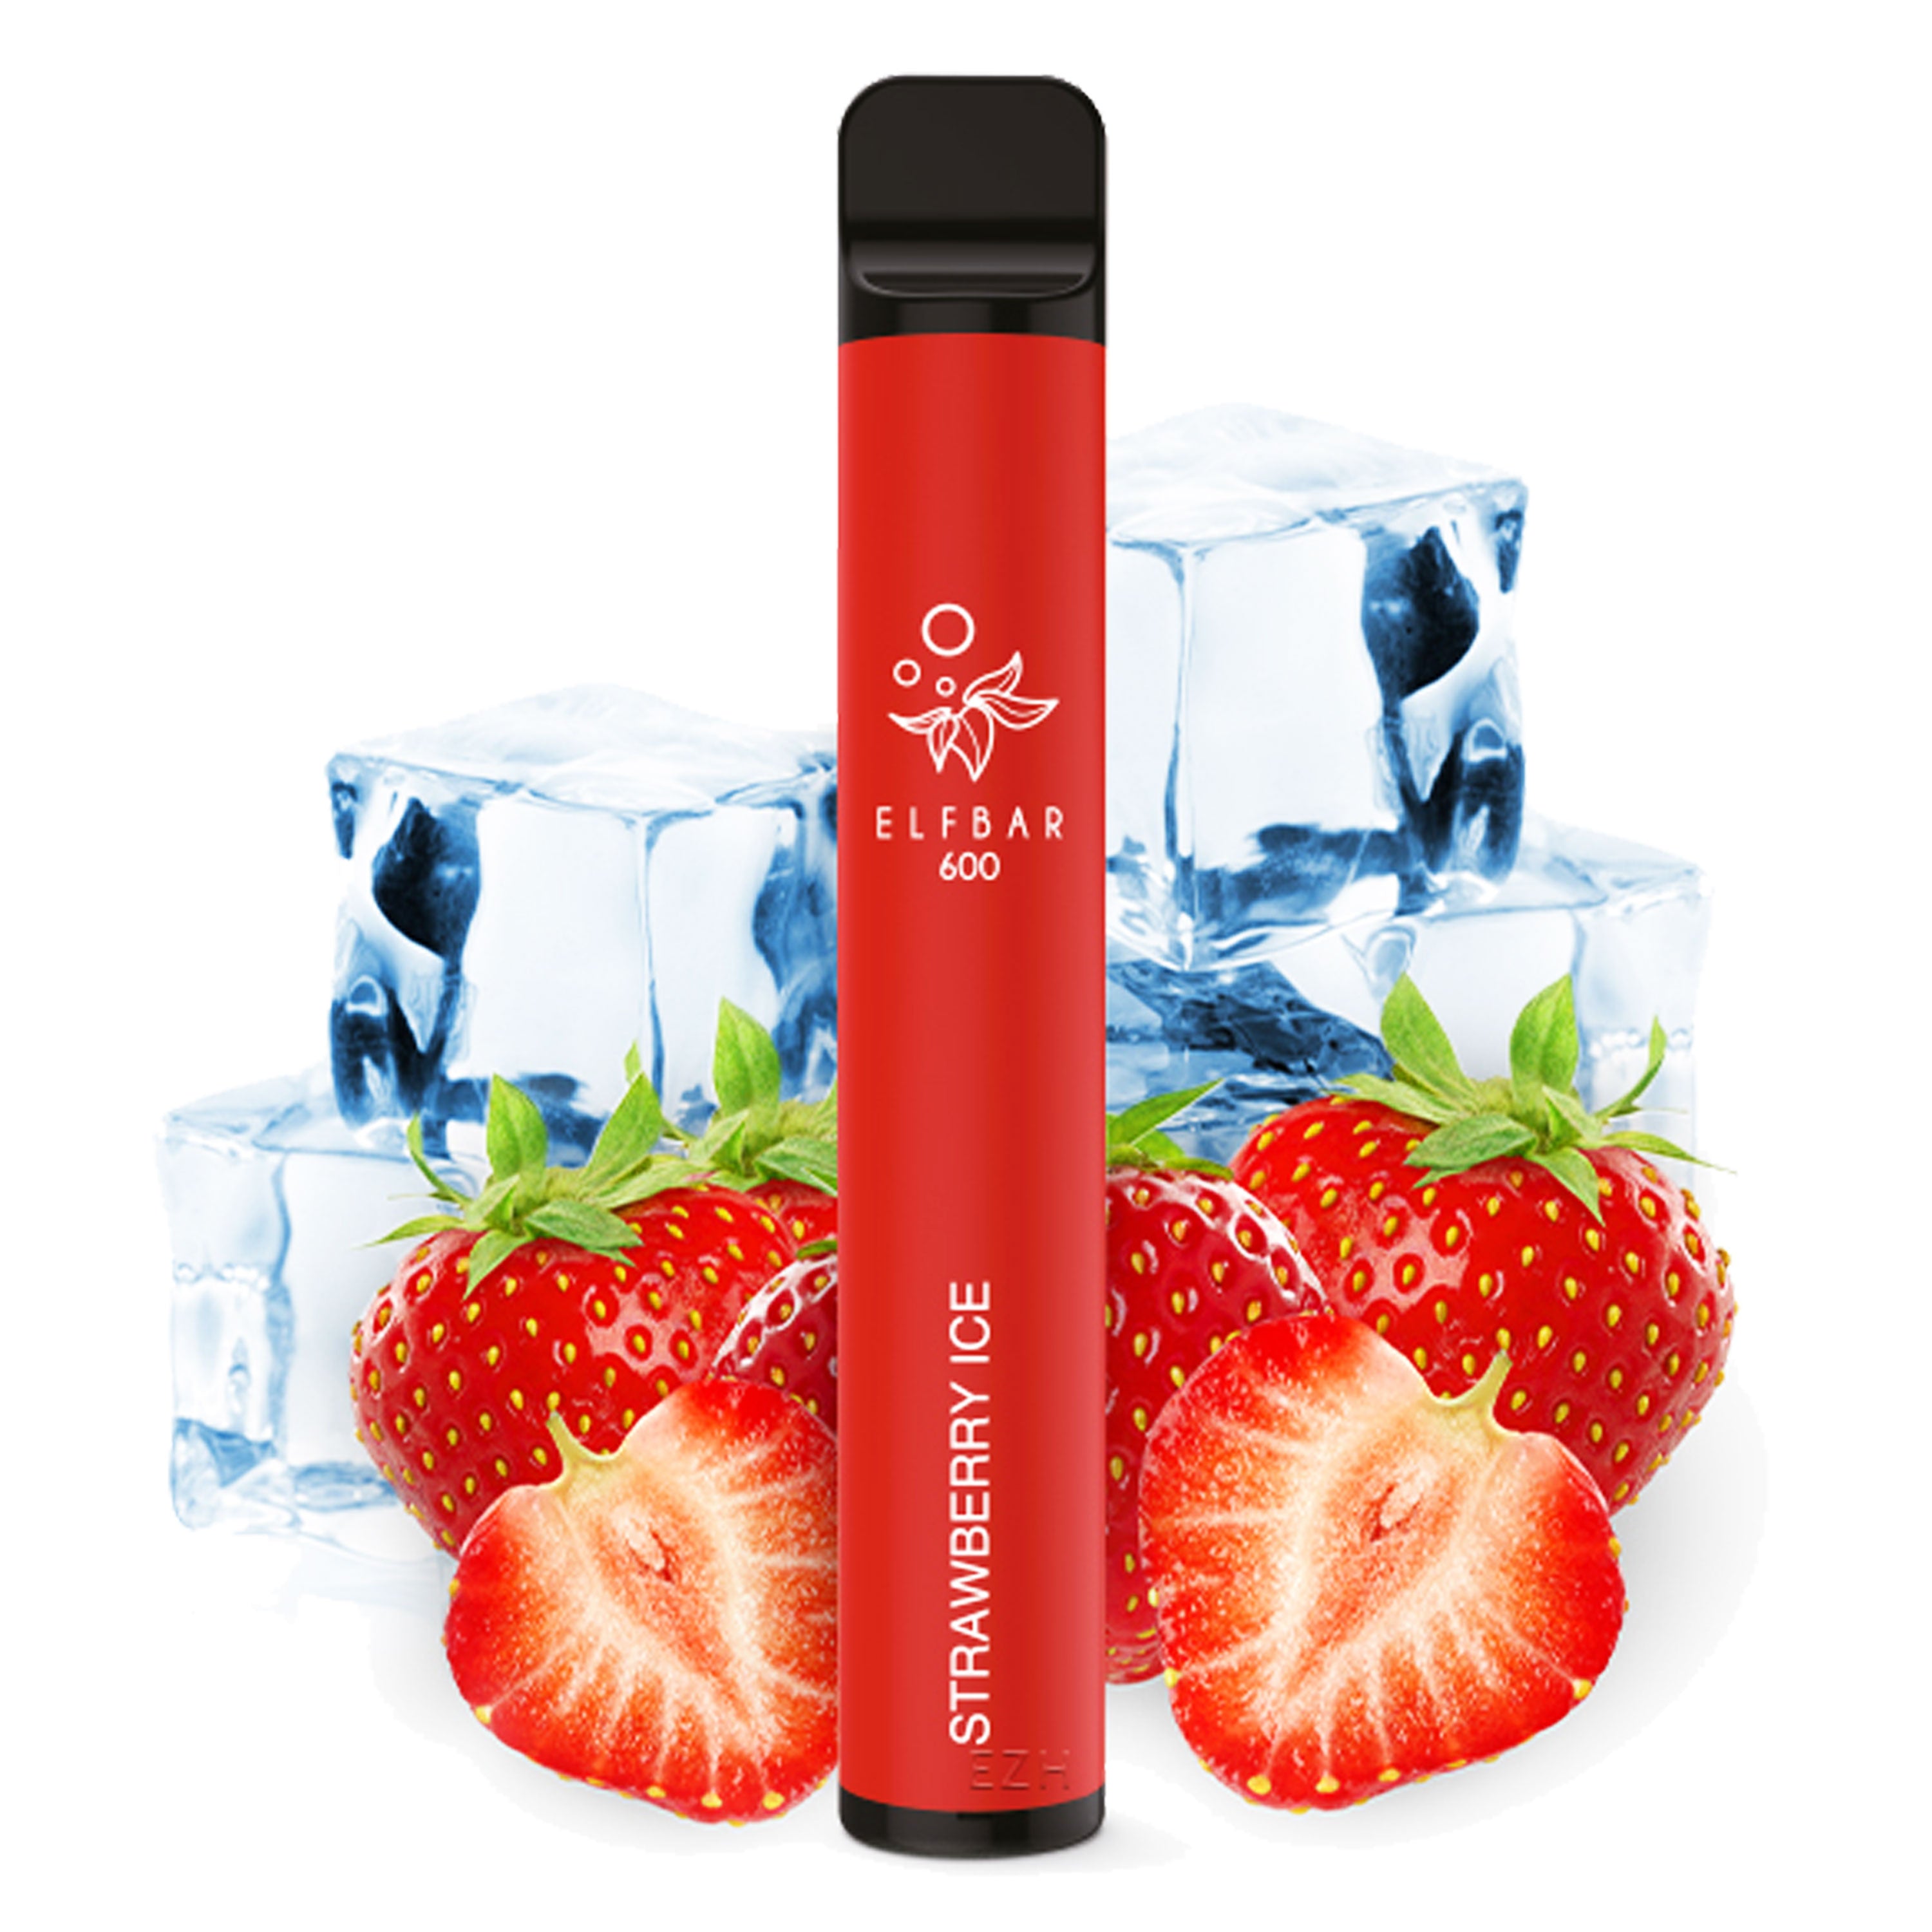 Elfbar - 600 - Strawberry Ice (2 ml) 600 Züge 20mg/ml - Einweg E-Zigarette